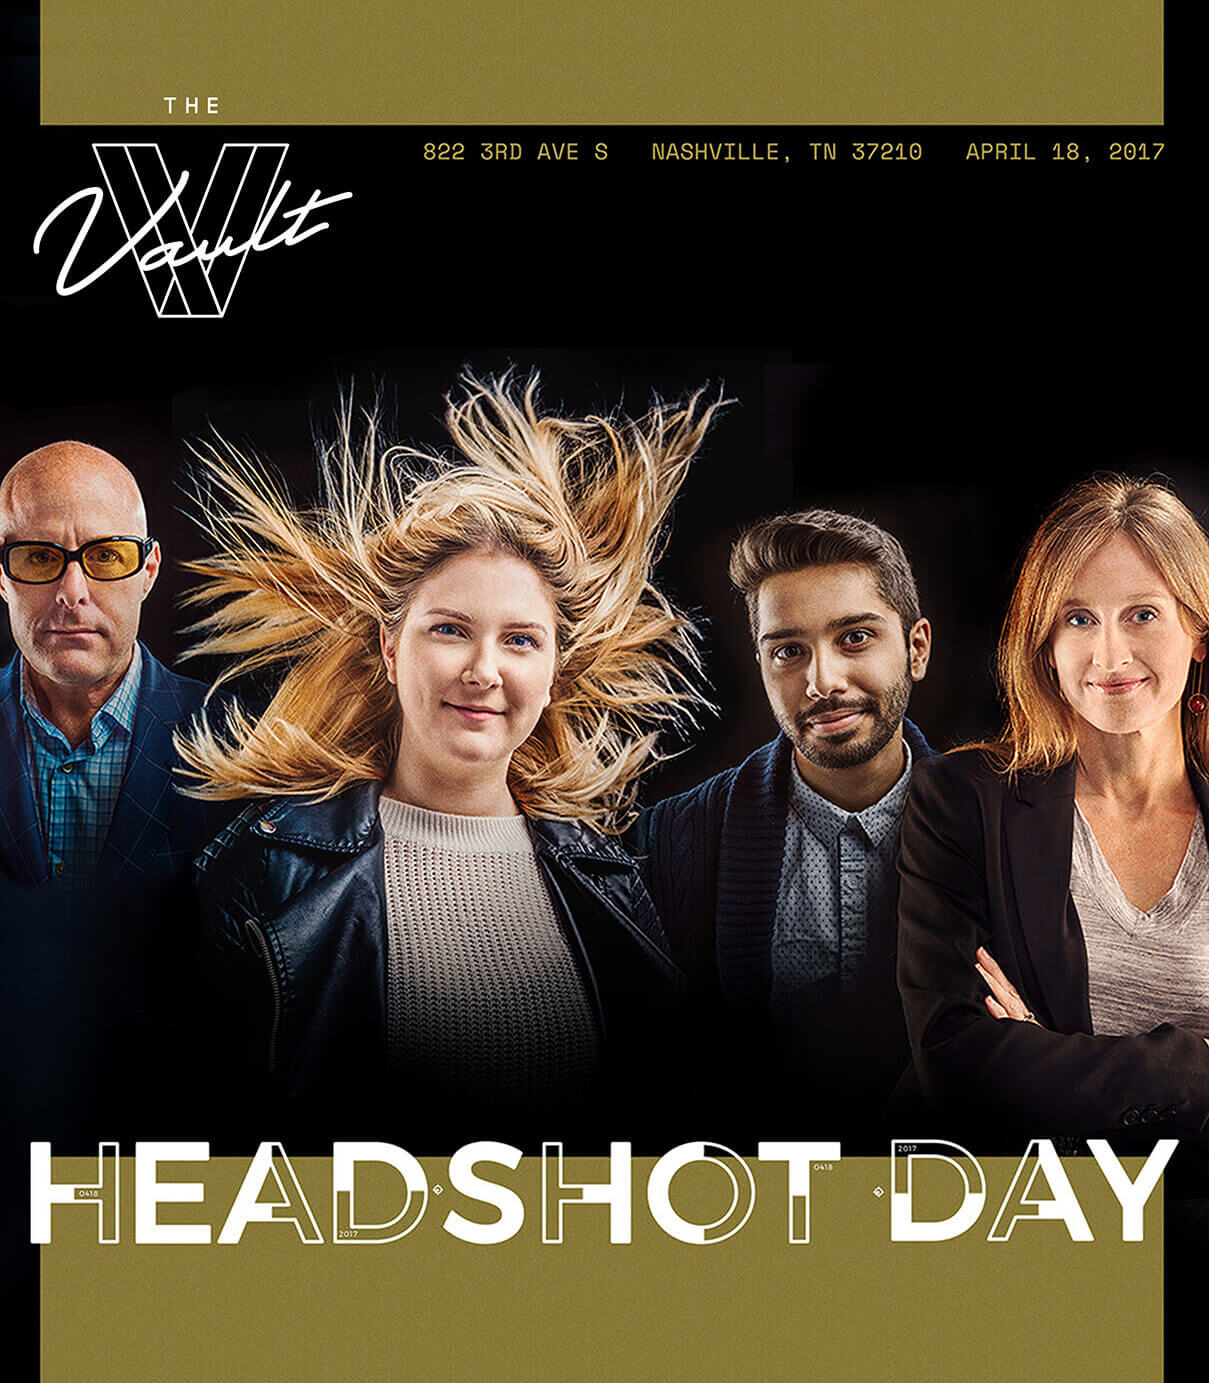 Headshot Day instagram promotional social post for The Vault Nashville